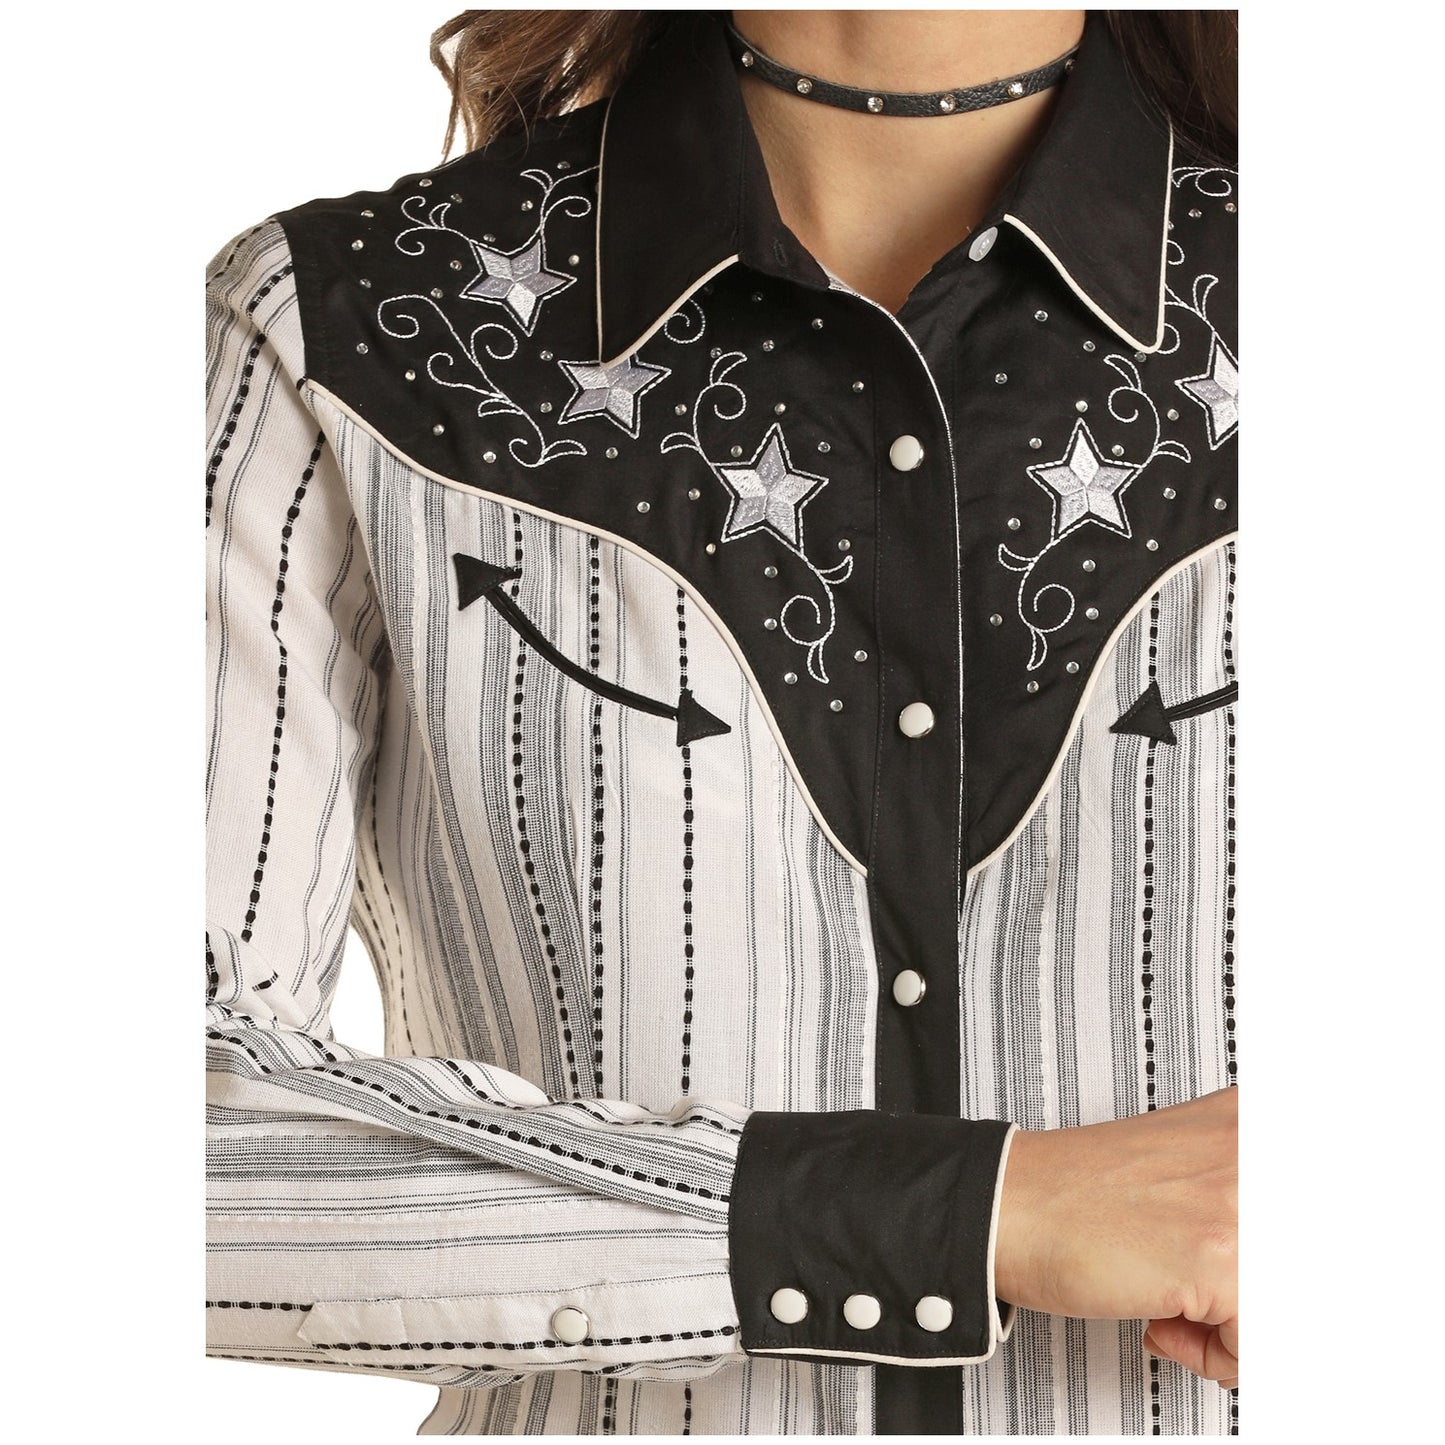 Panhandle® Ladies Long Sleeve Striped Retro Snap Down Shirt 22S2130